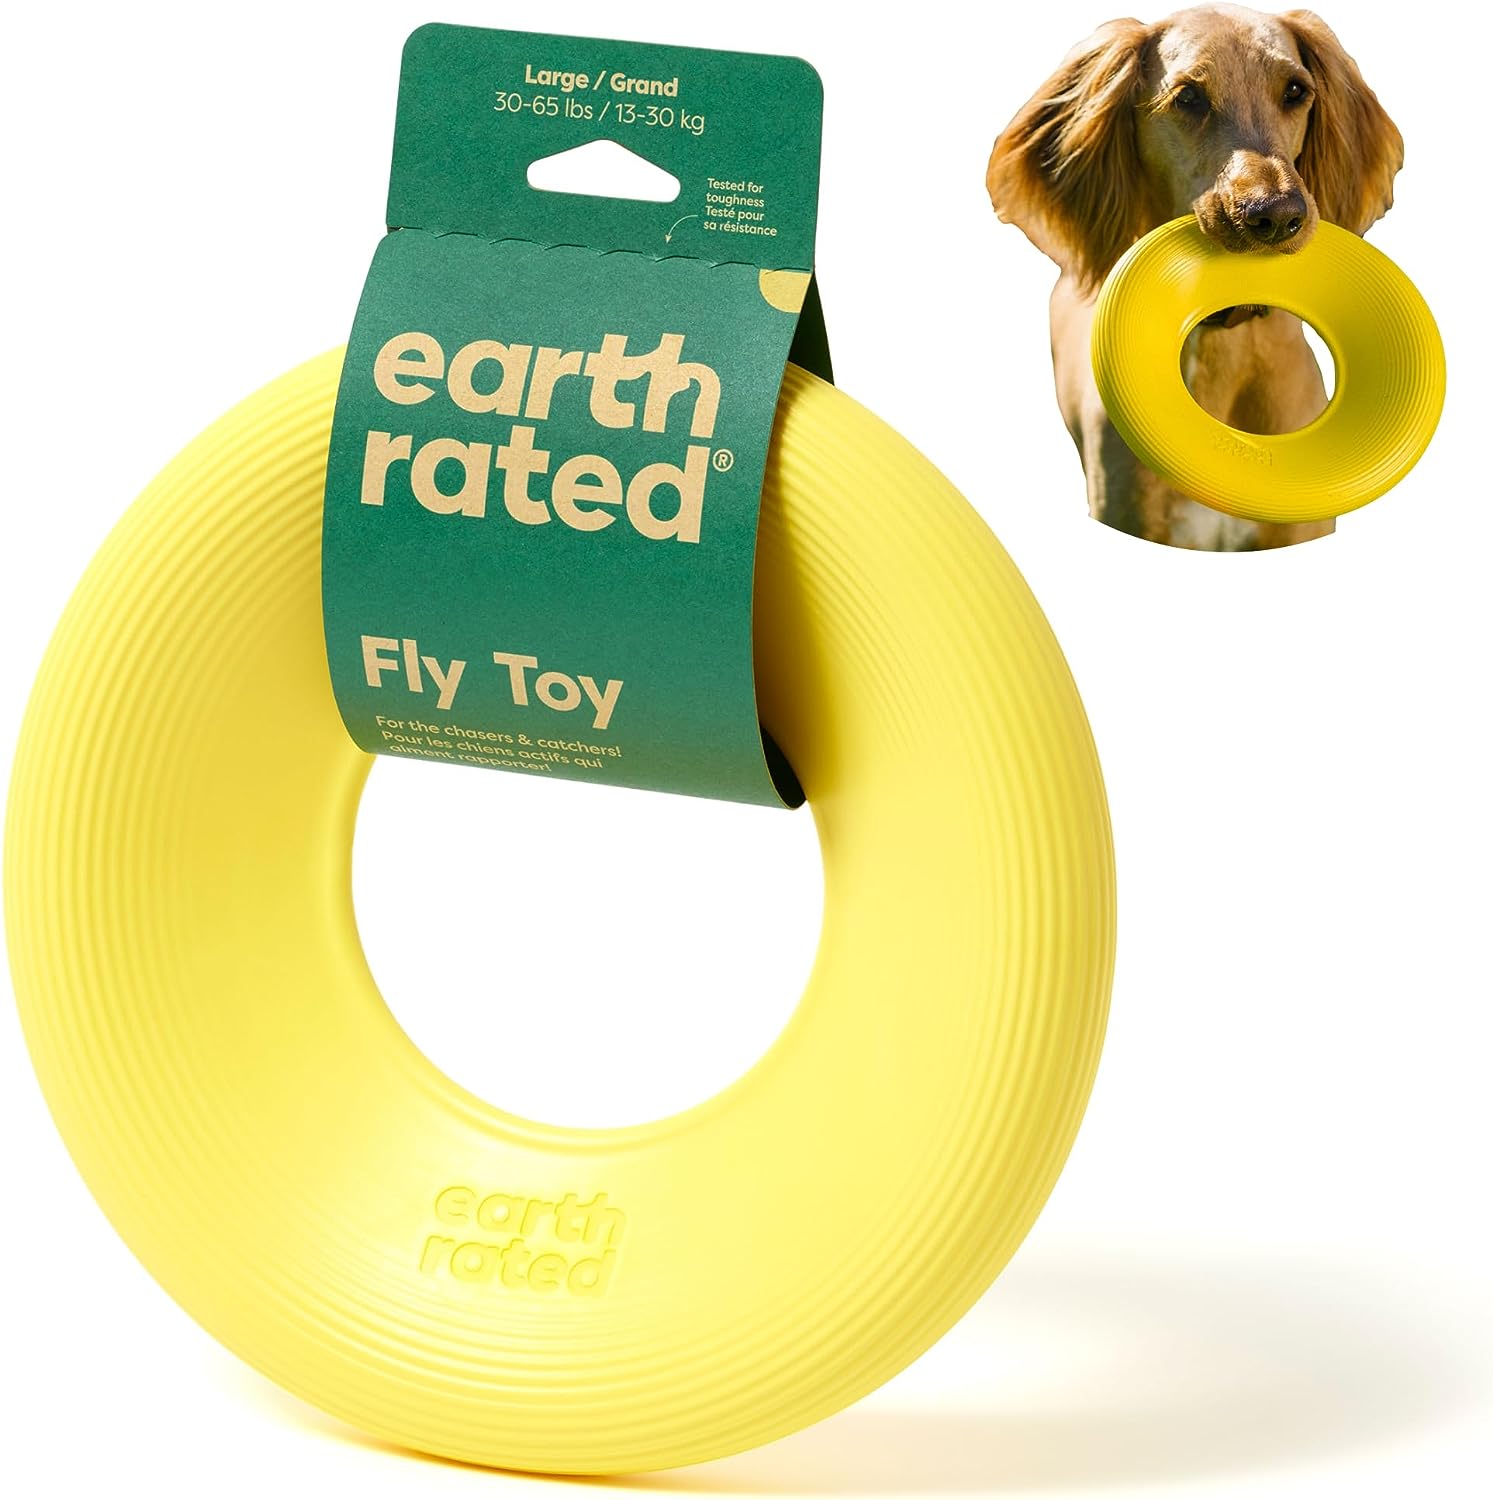 KONG Goodie Bone - Rubber Dog Toy - Dental Dog Toy for Teeth & Gum Health -  Durable Dog Chew Toy - Hard Rubber Bone for Dogs - Fillable Toy for